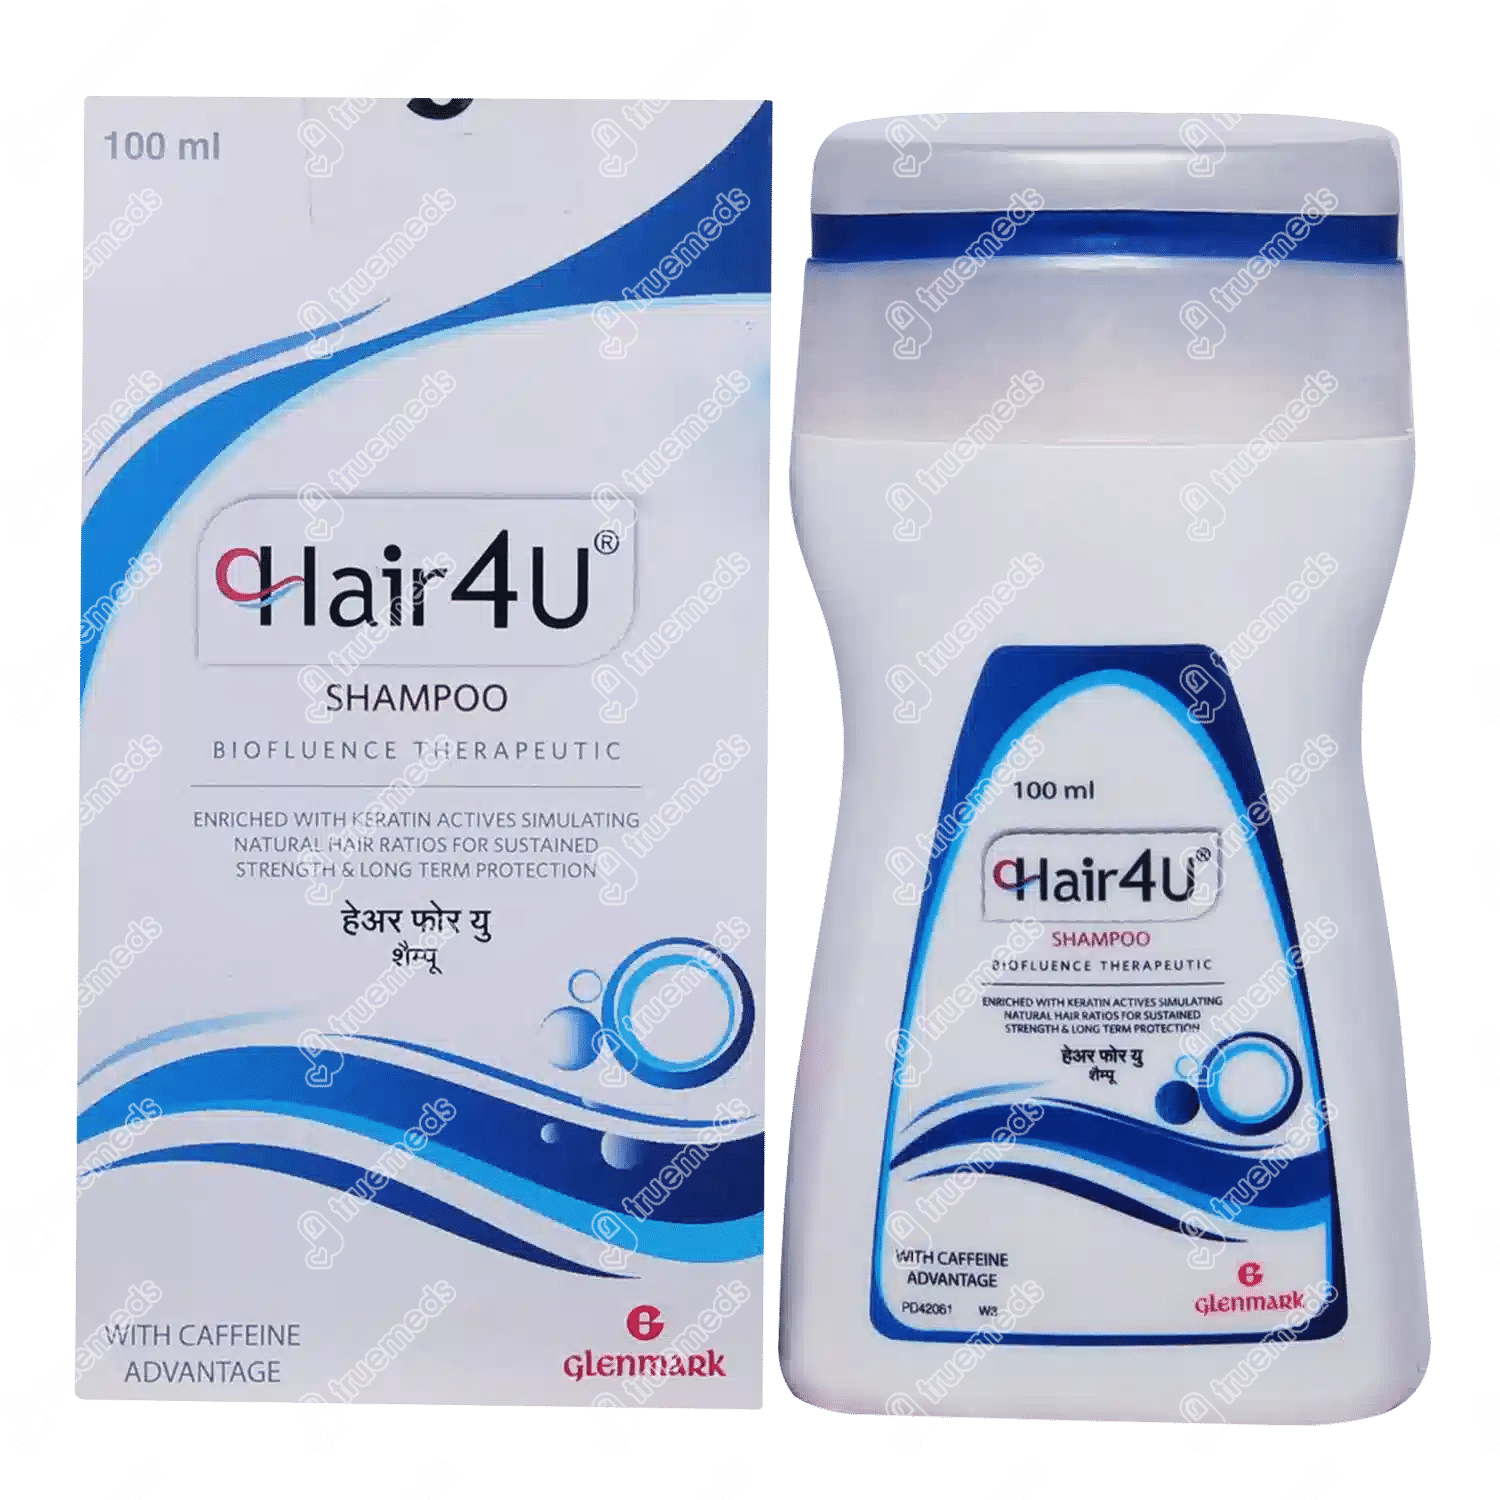 Hair 4u Shampoo 100 ML - Uses, Side Effects, Dosage, Price | Truemeds